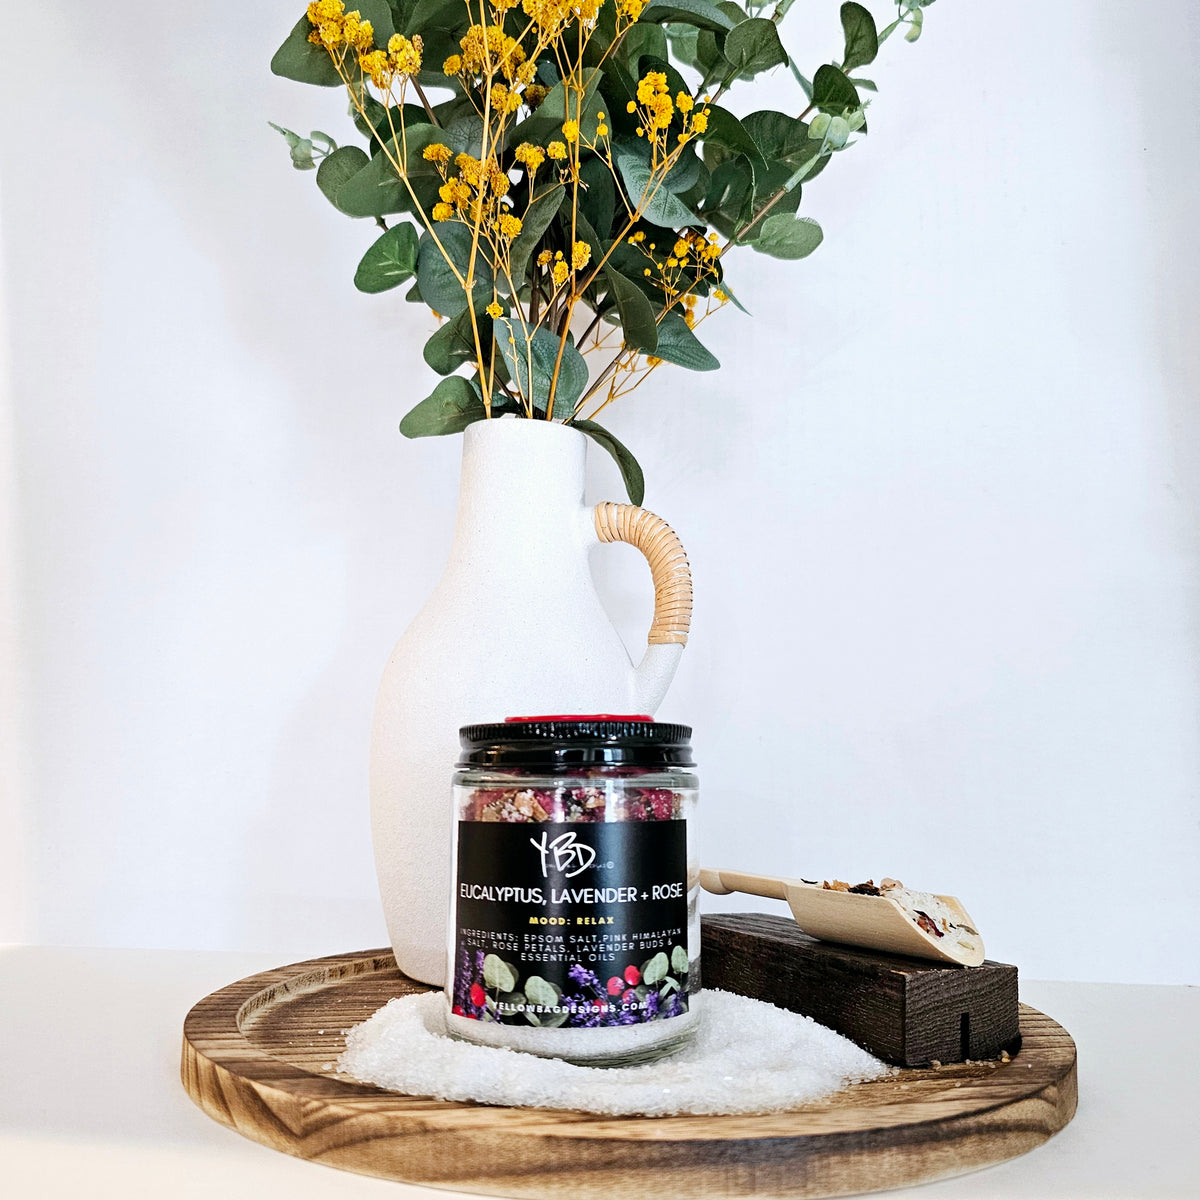 Luxury Bath Salt/Foot Soak 8oz - Eucalyptus, Lavender + Rose